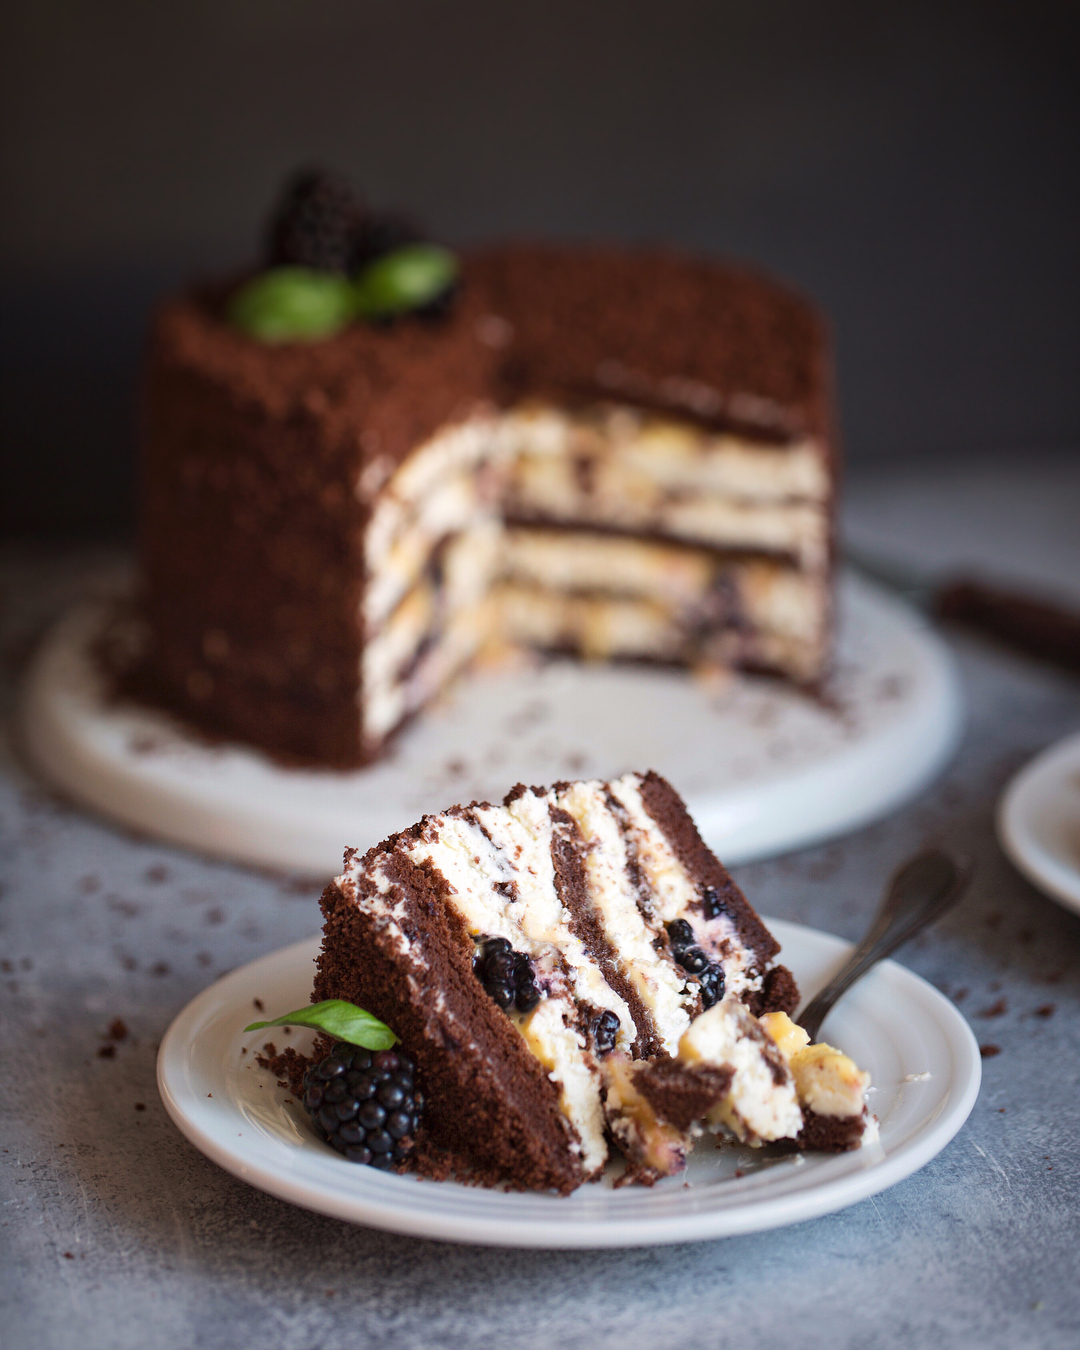 Chocolate cake with meringue layer